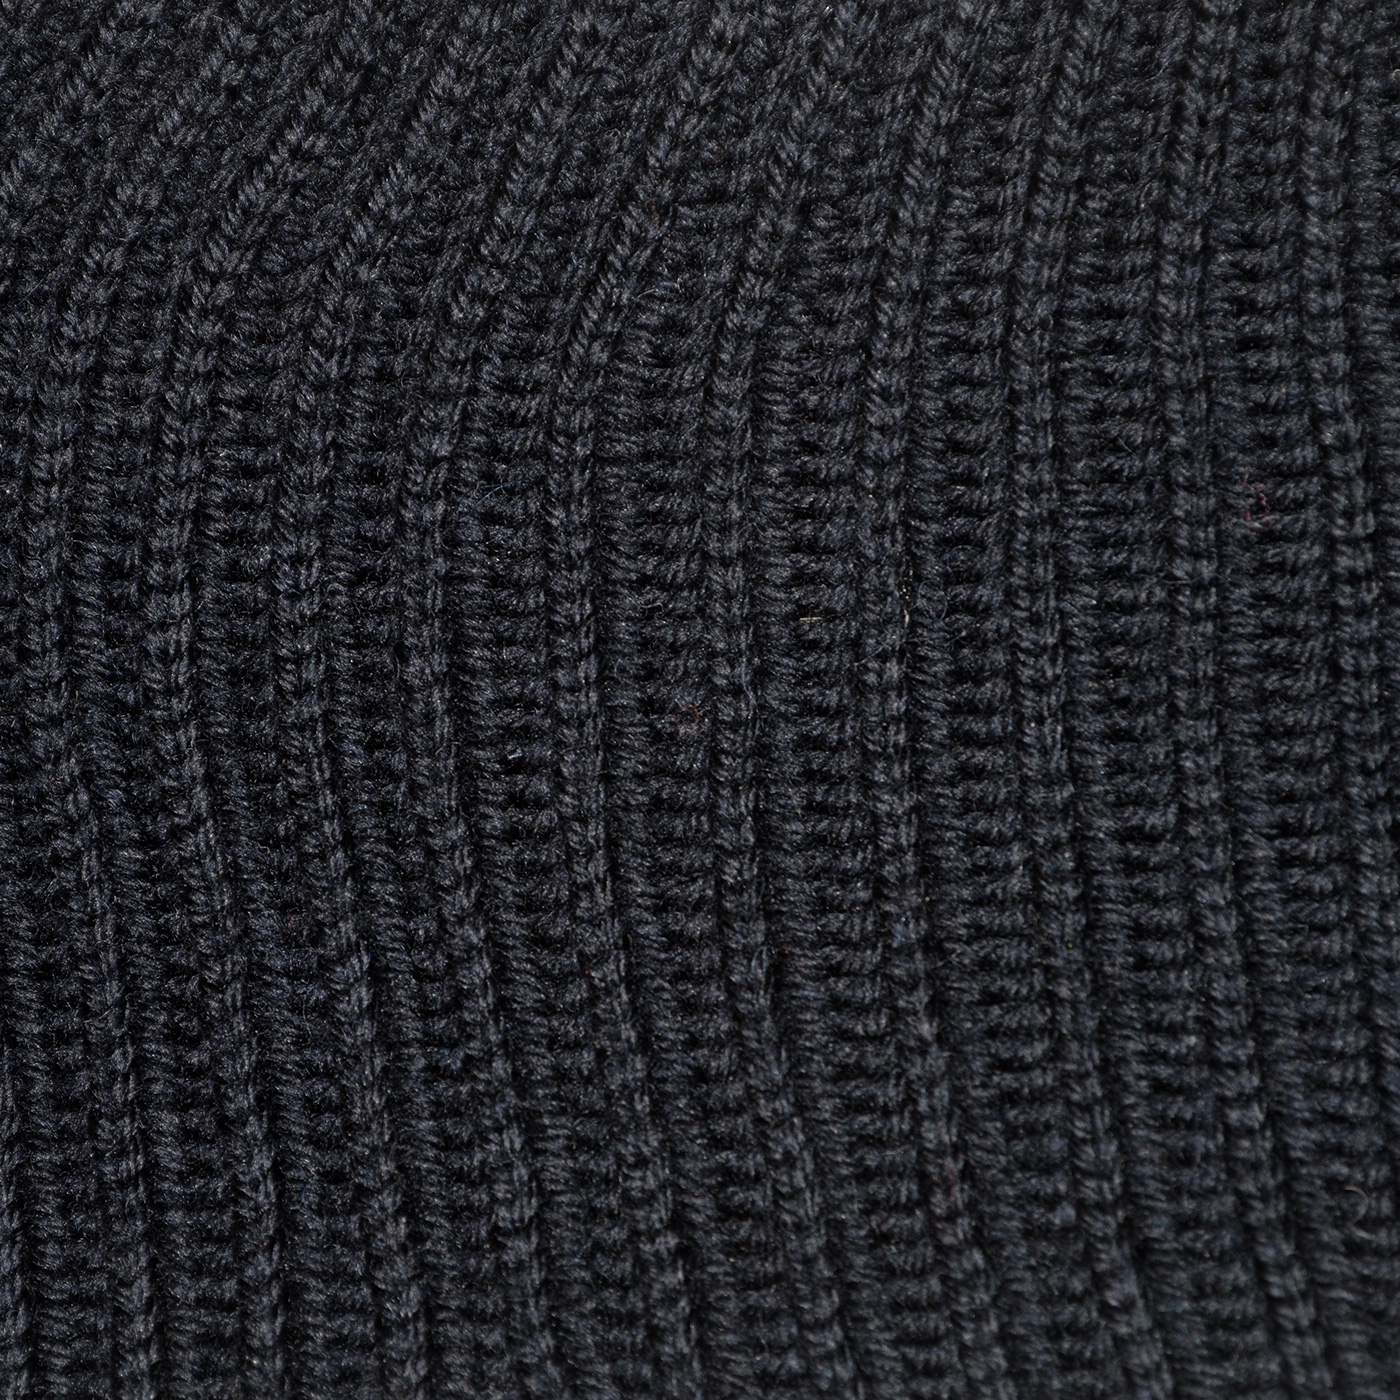 Textiles knitting knit knitwear Textilesdesign patterndesign